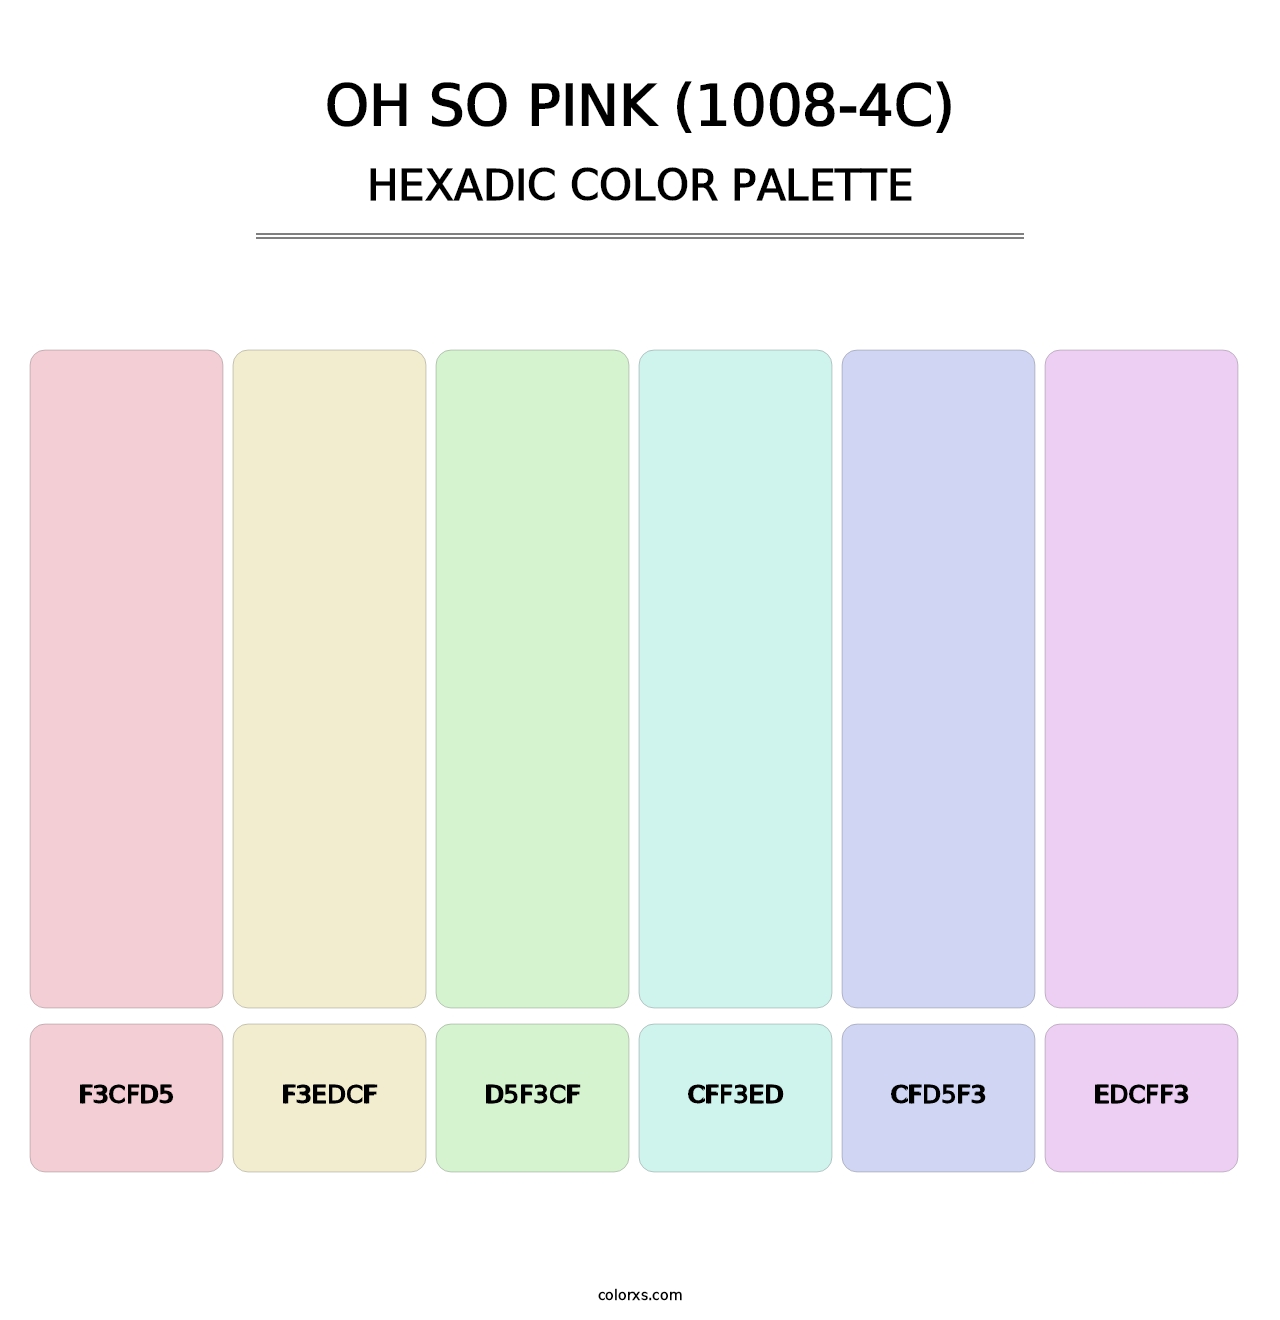 Oh So Pink (1008-4C) - Hexadic Color Palette